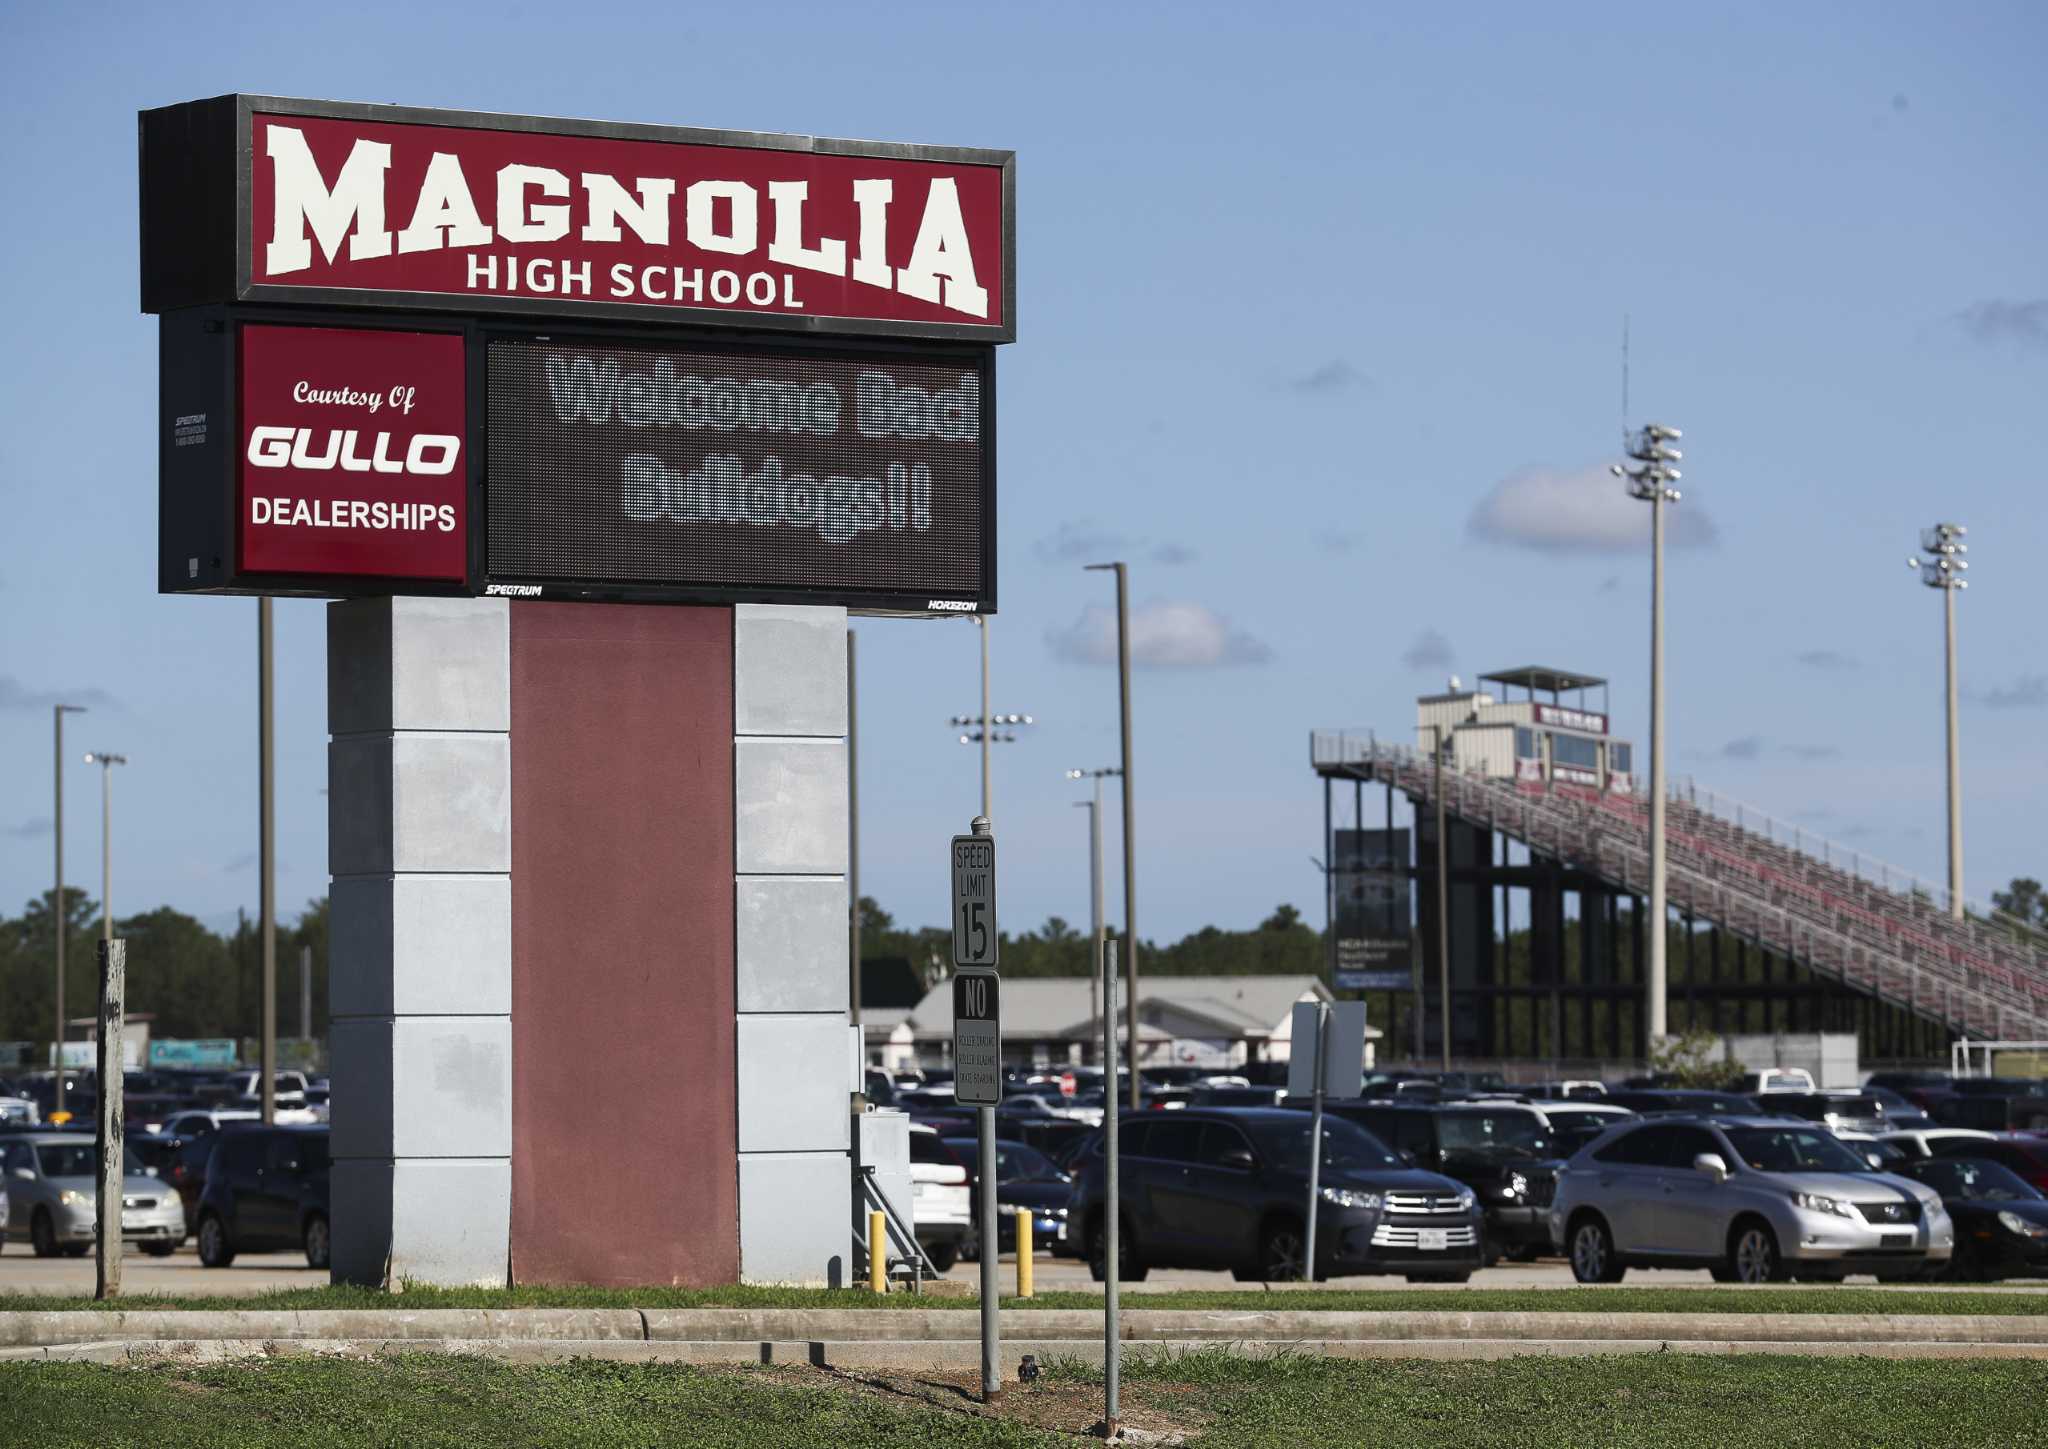 Magnolia ISD 175M budget includes a 500 bonus for teachers, tax cut